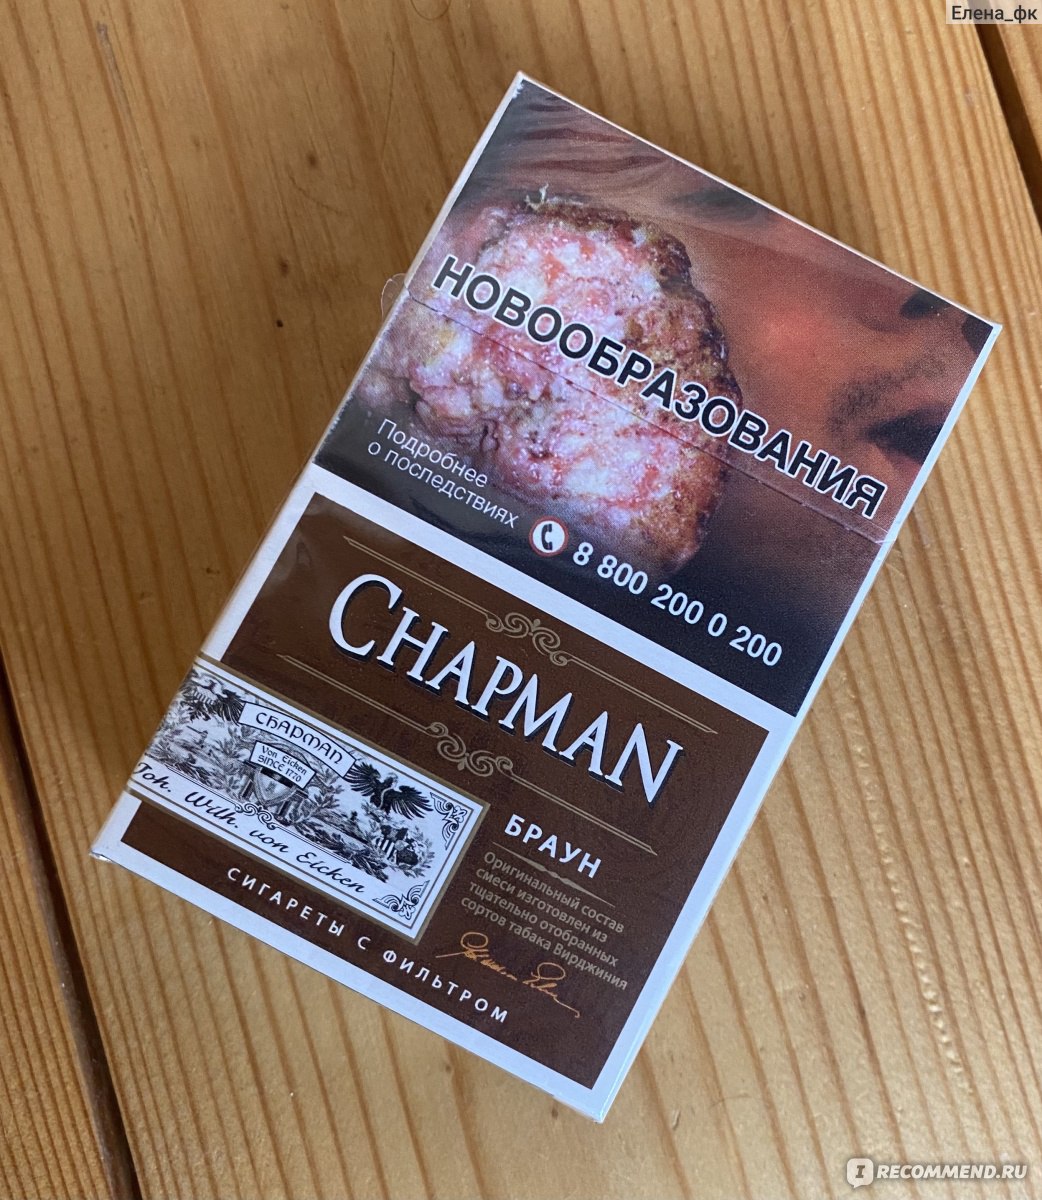 Чапмен вкусы. Chapman сигареты Браун. Chapman сигареты вкусы Браун. Сигареты Chapman шоколад. Чапман Браун тонкие.